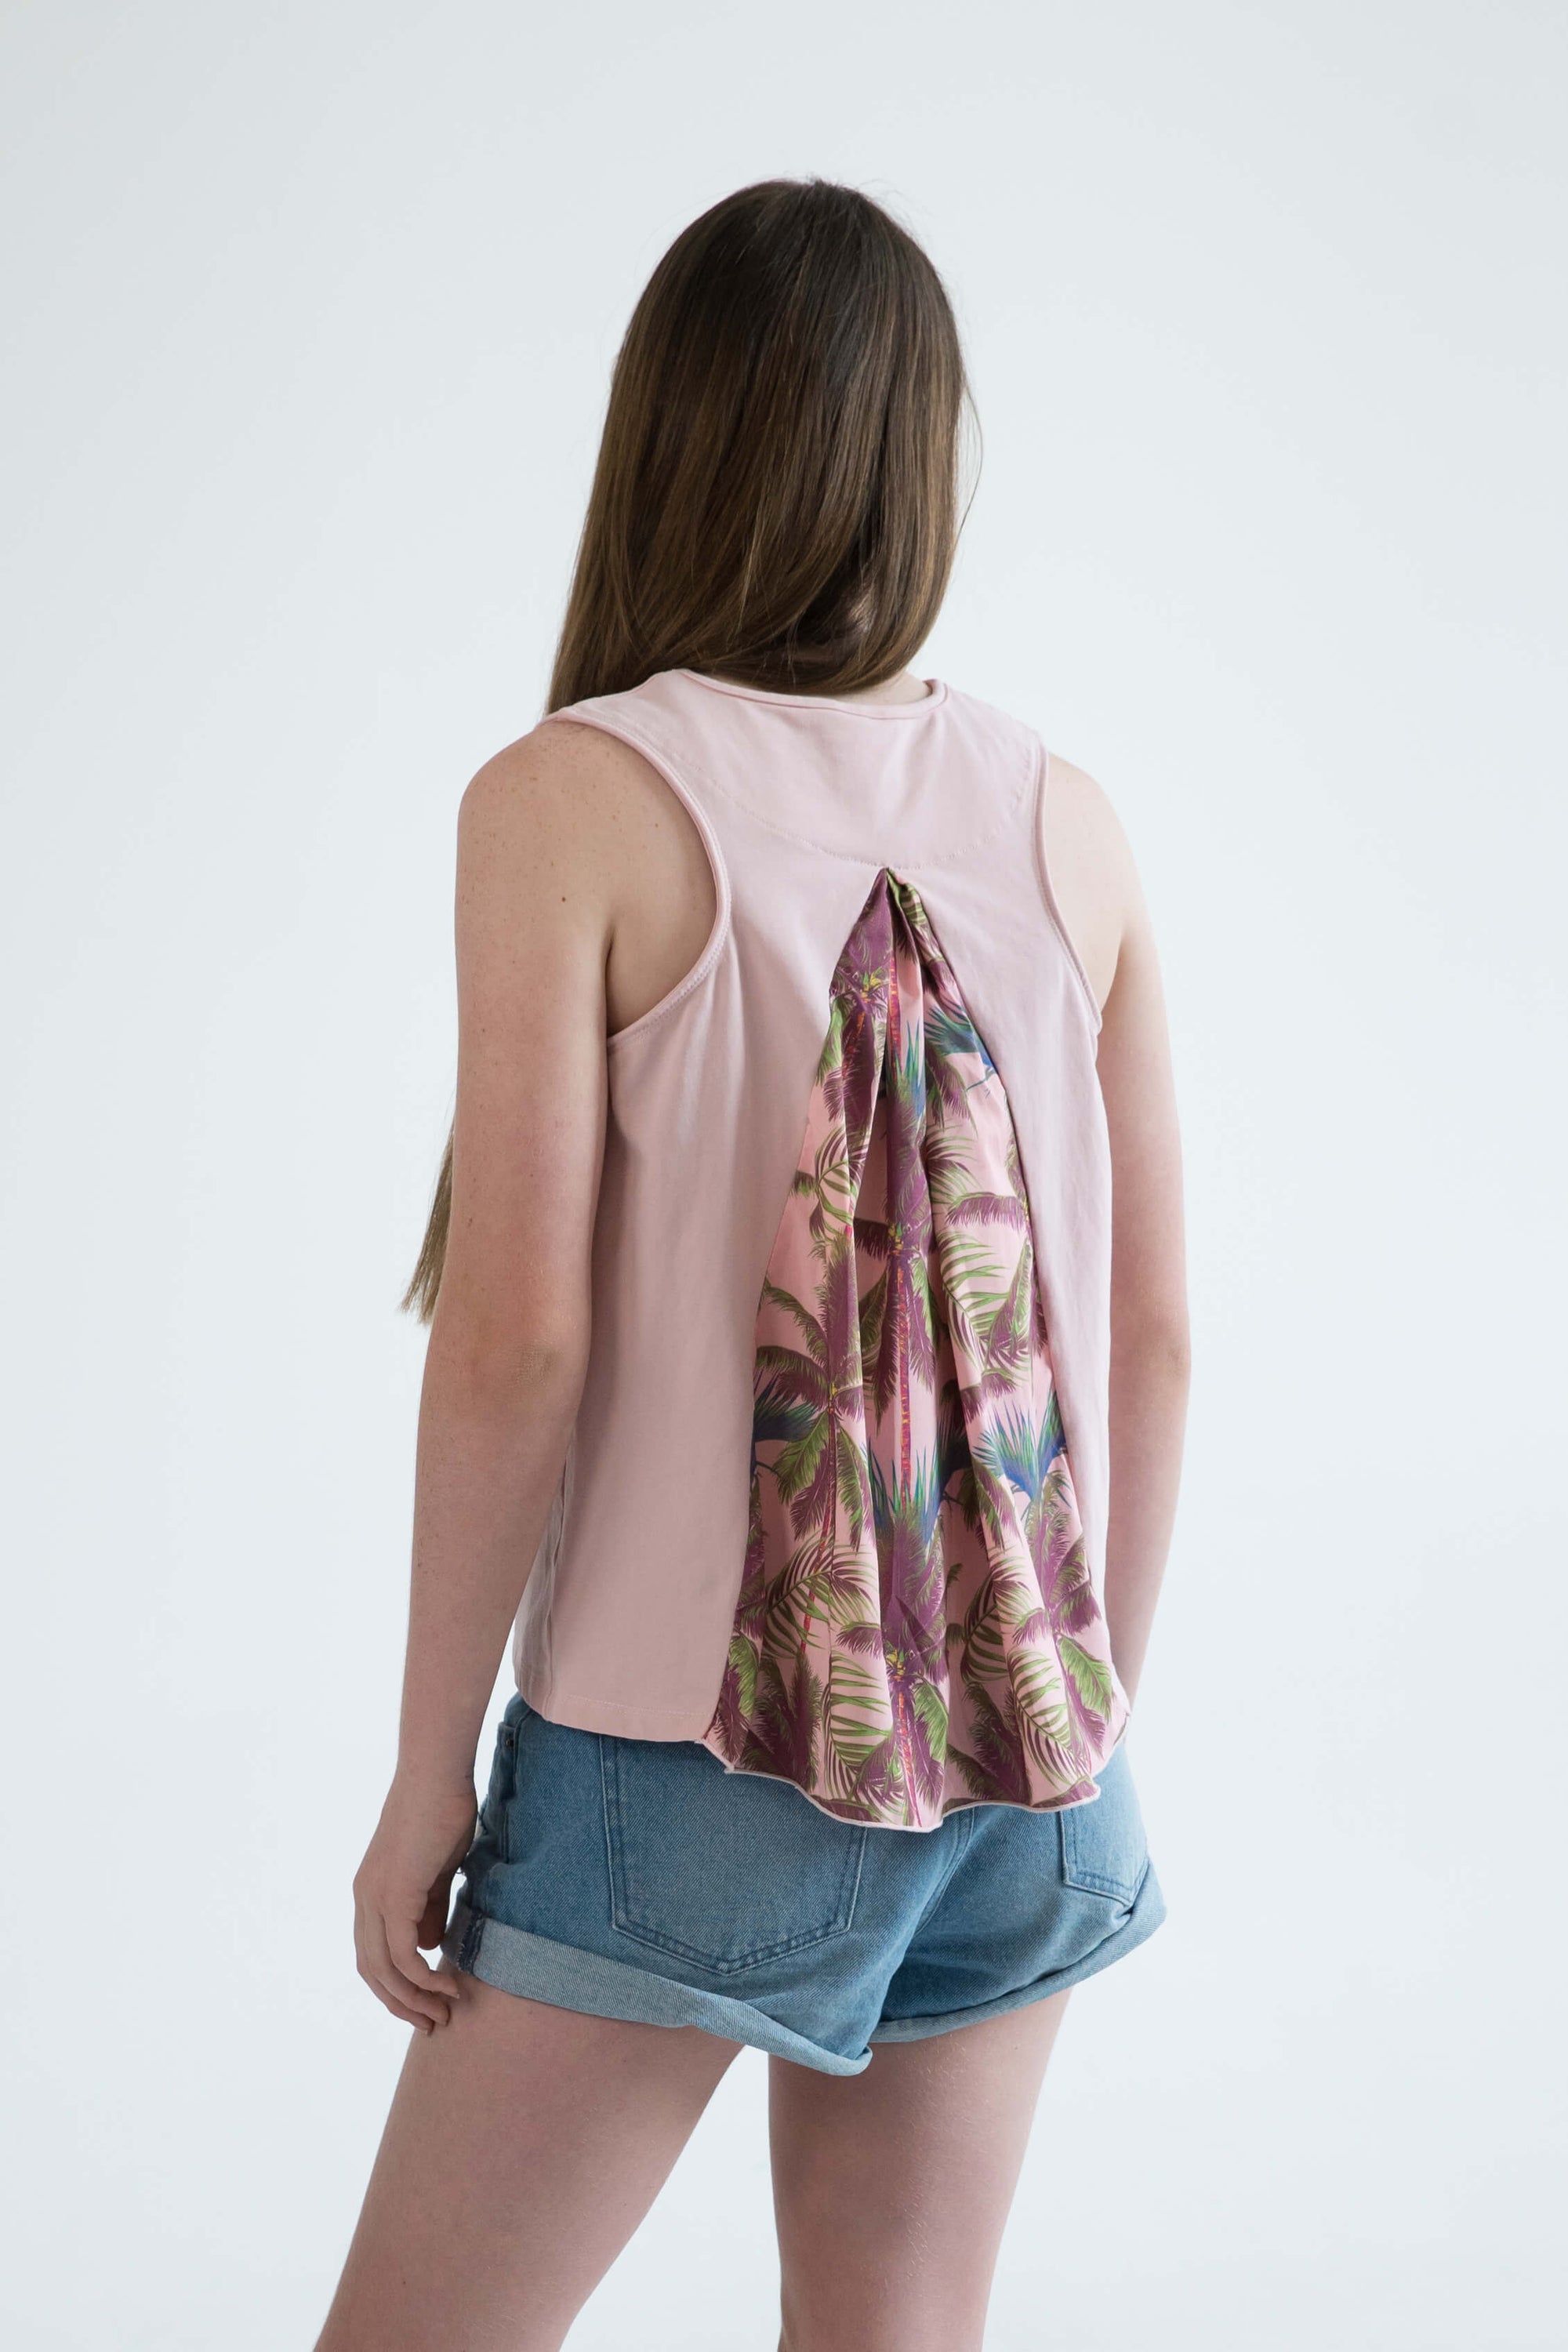 pink teen girls clothing sleeveless singlet top palm tree print by Love Haidee Australia racer back